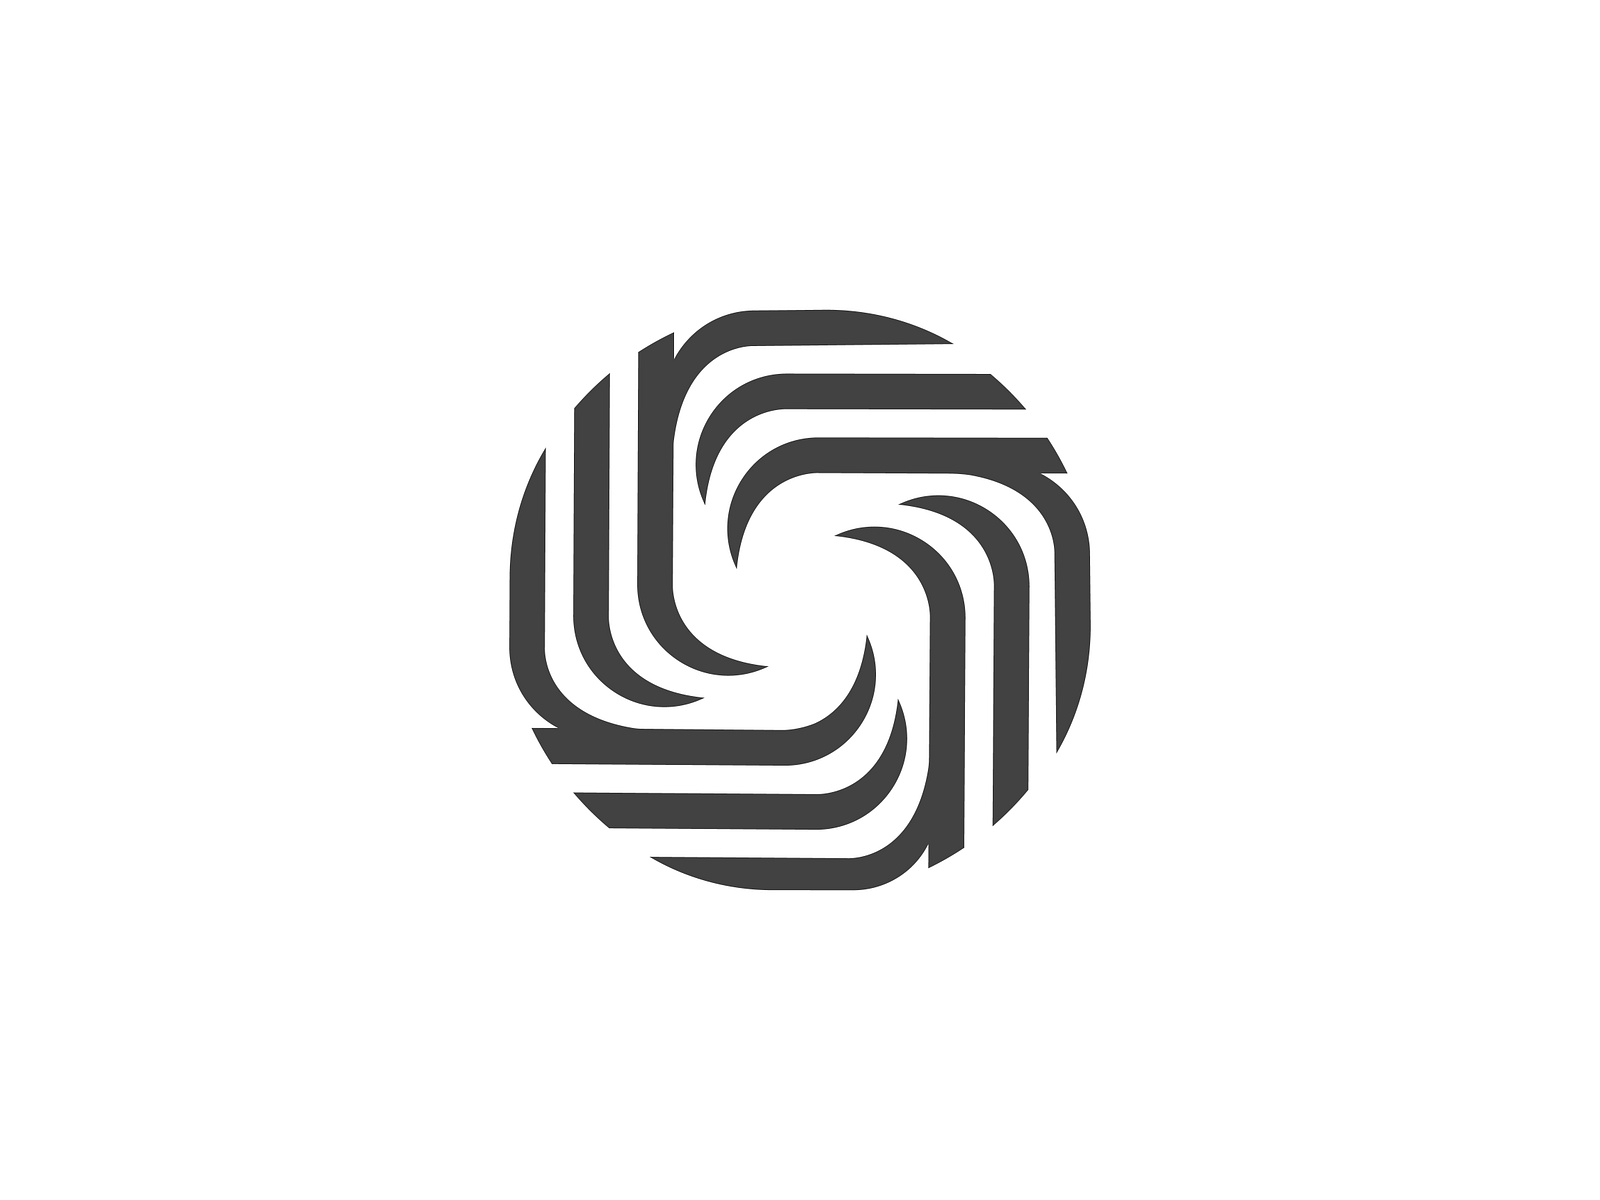 abstract circle logo by Nini Gelashvili on Dribbble